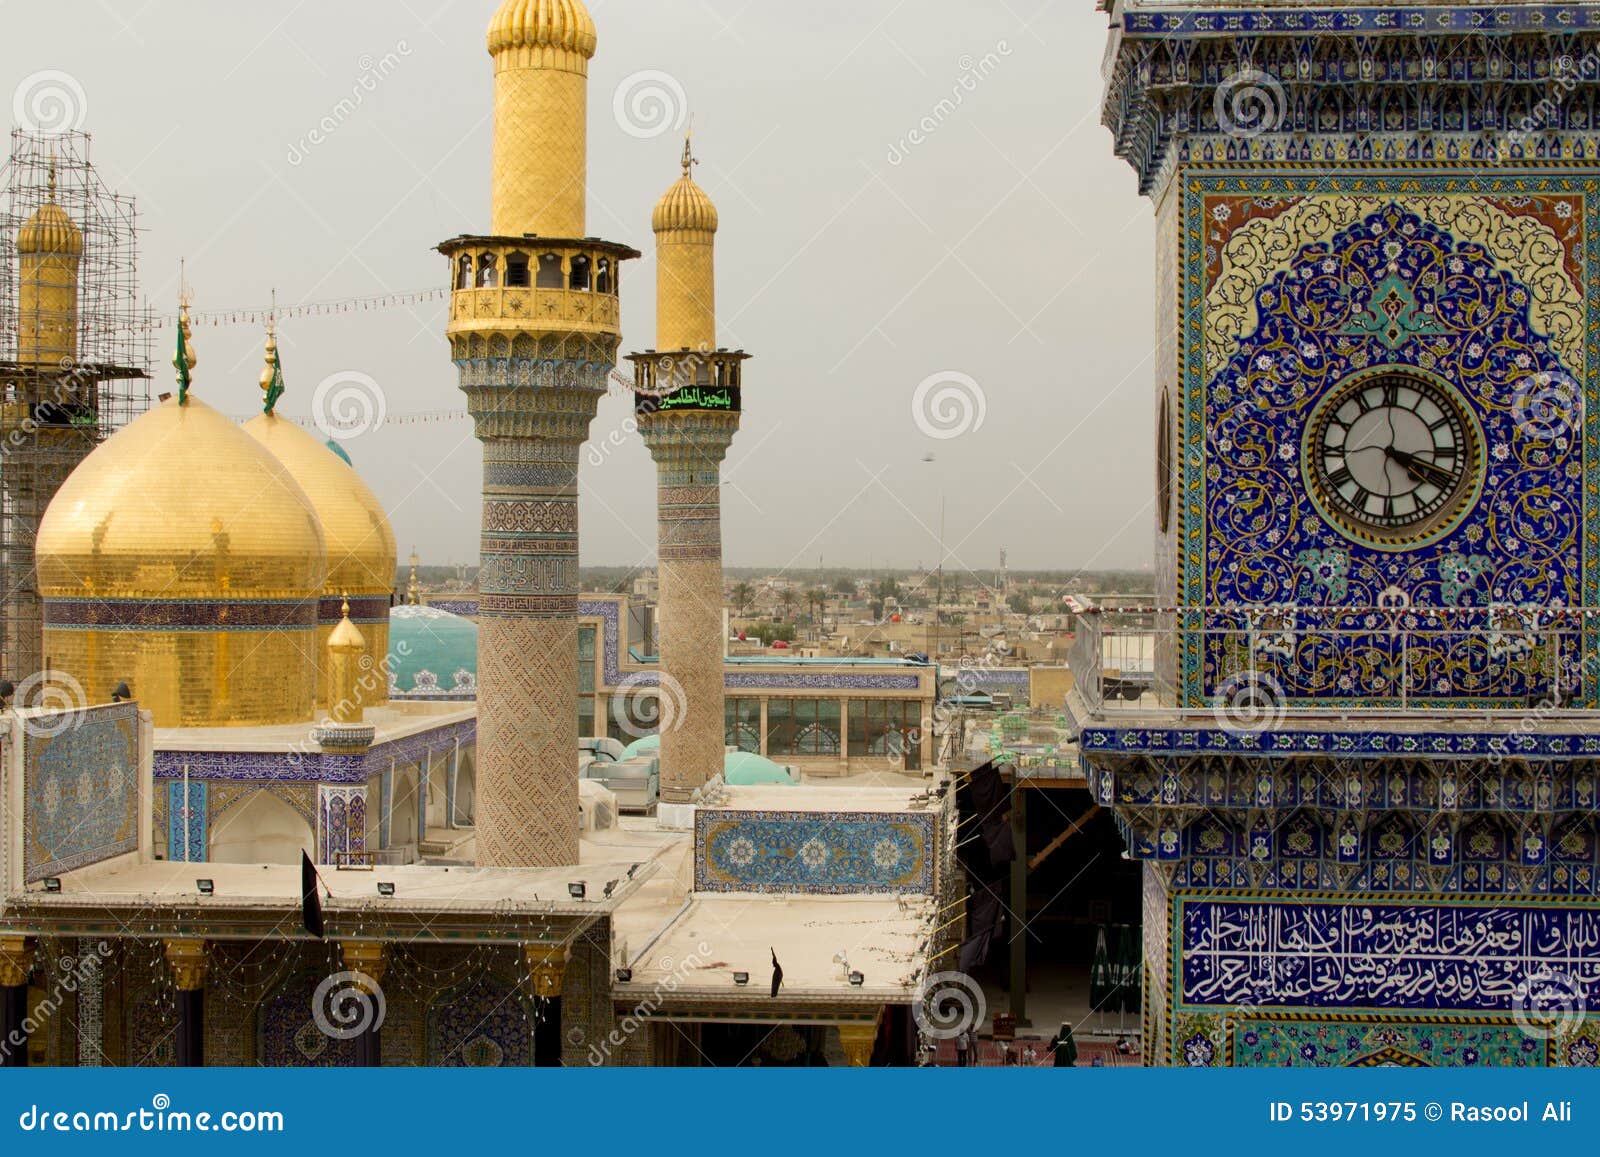 the shrine of imam moussa al kadhim